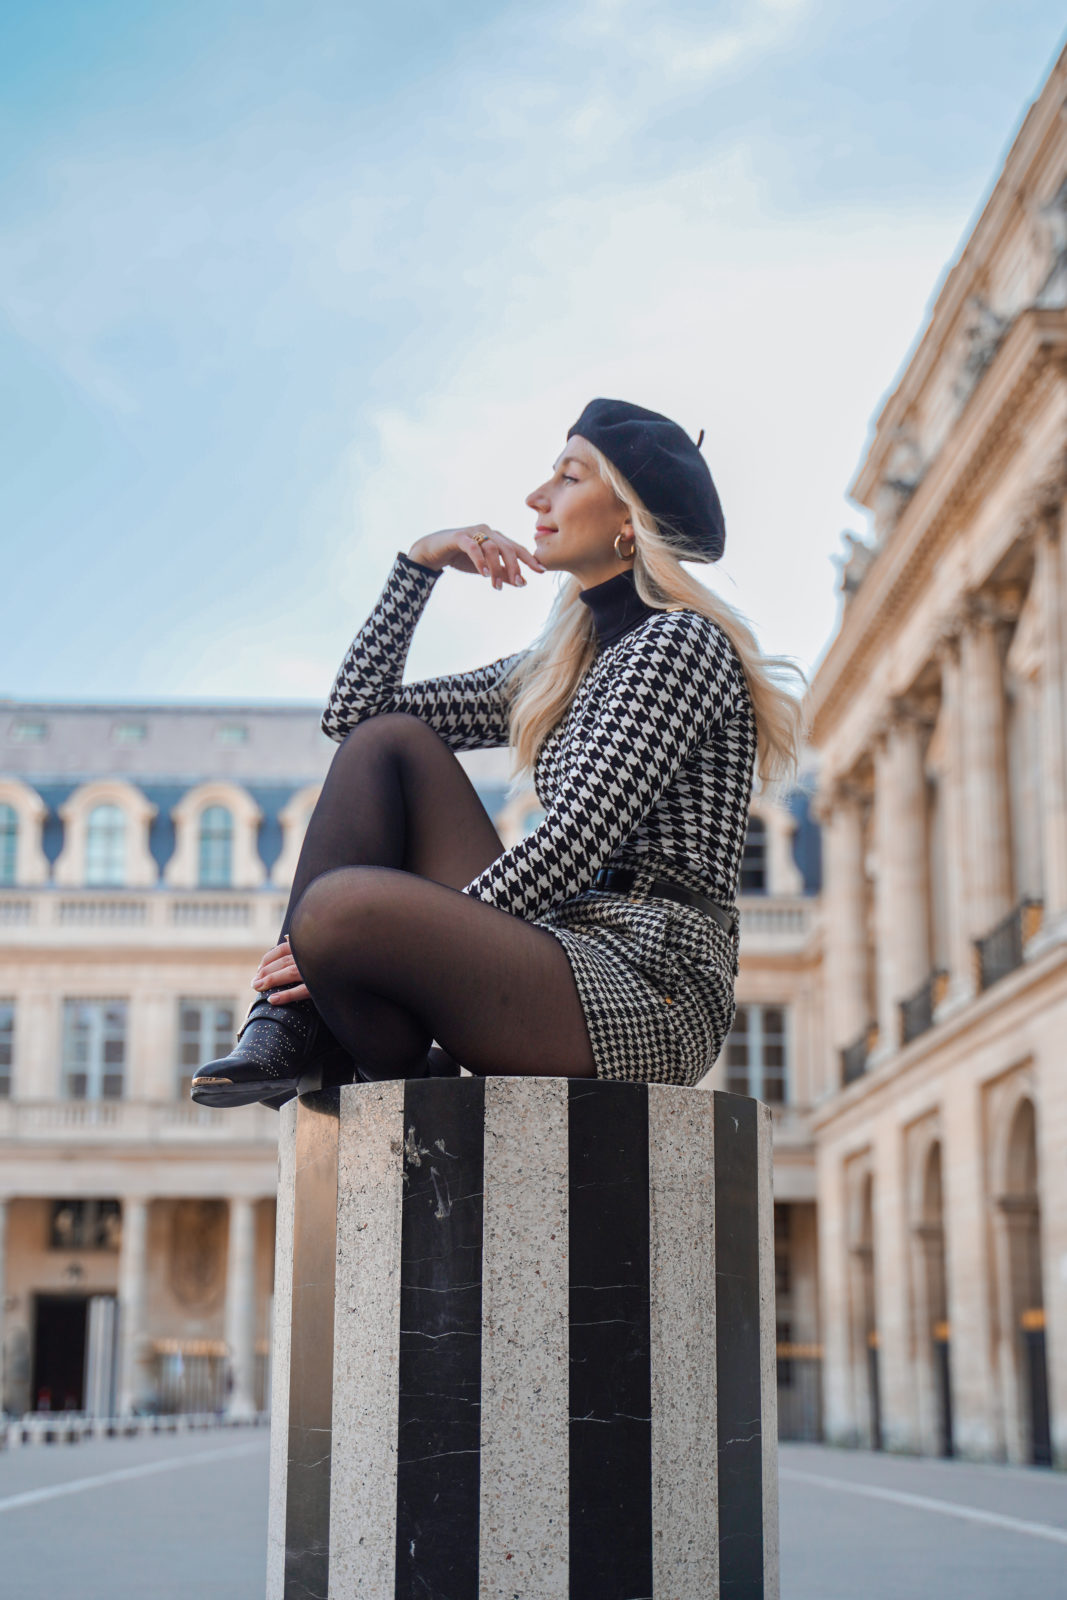 15 Instagrammable Locations and Hidden Gems in Paris